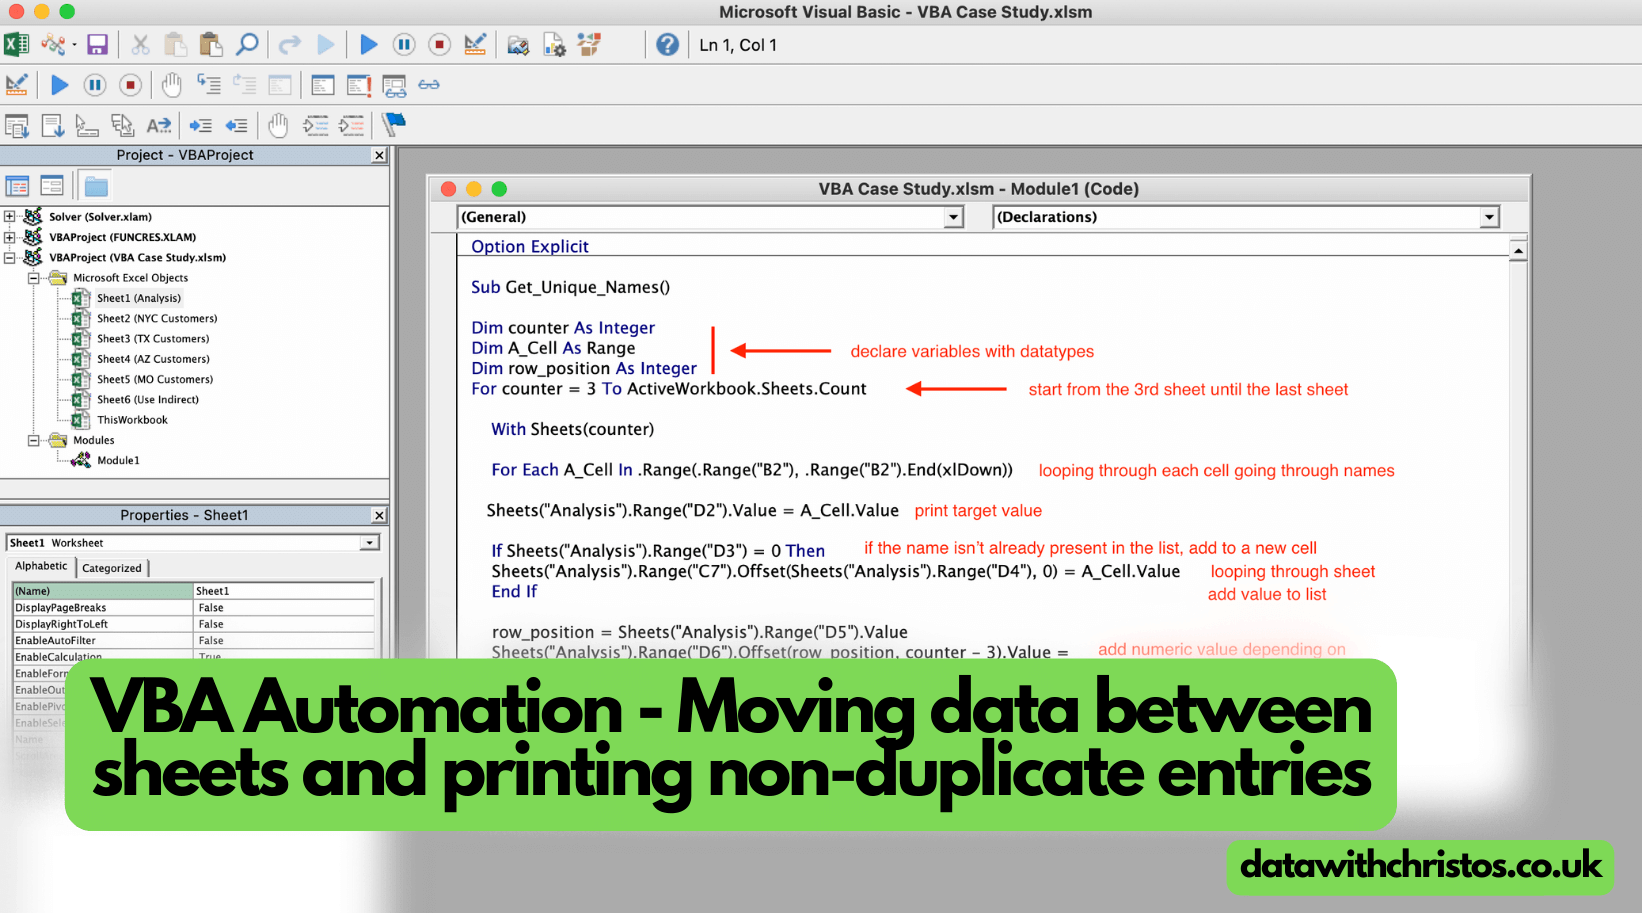 [VBA] Move data and print non-duplicate entries